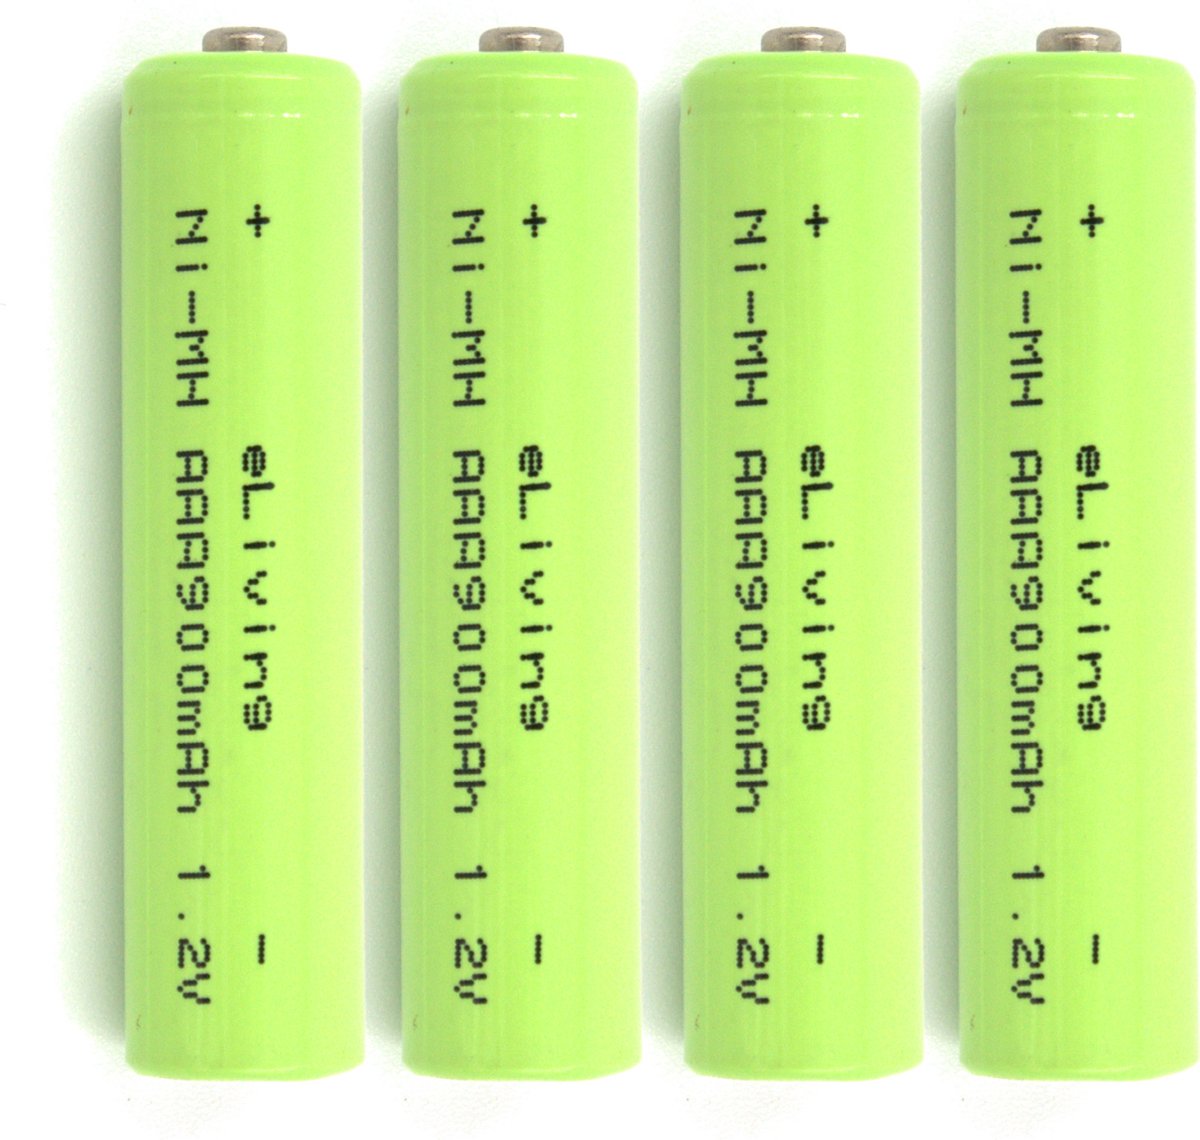 eLiving - Oplaadbare AAA batterijen. 900mAh. 4 stuks